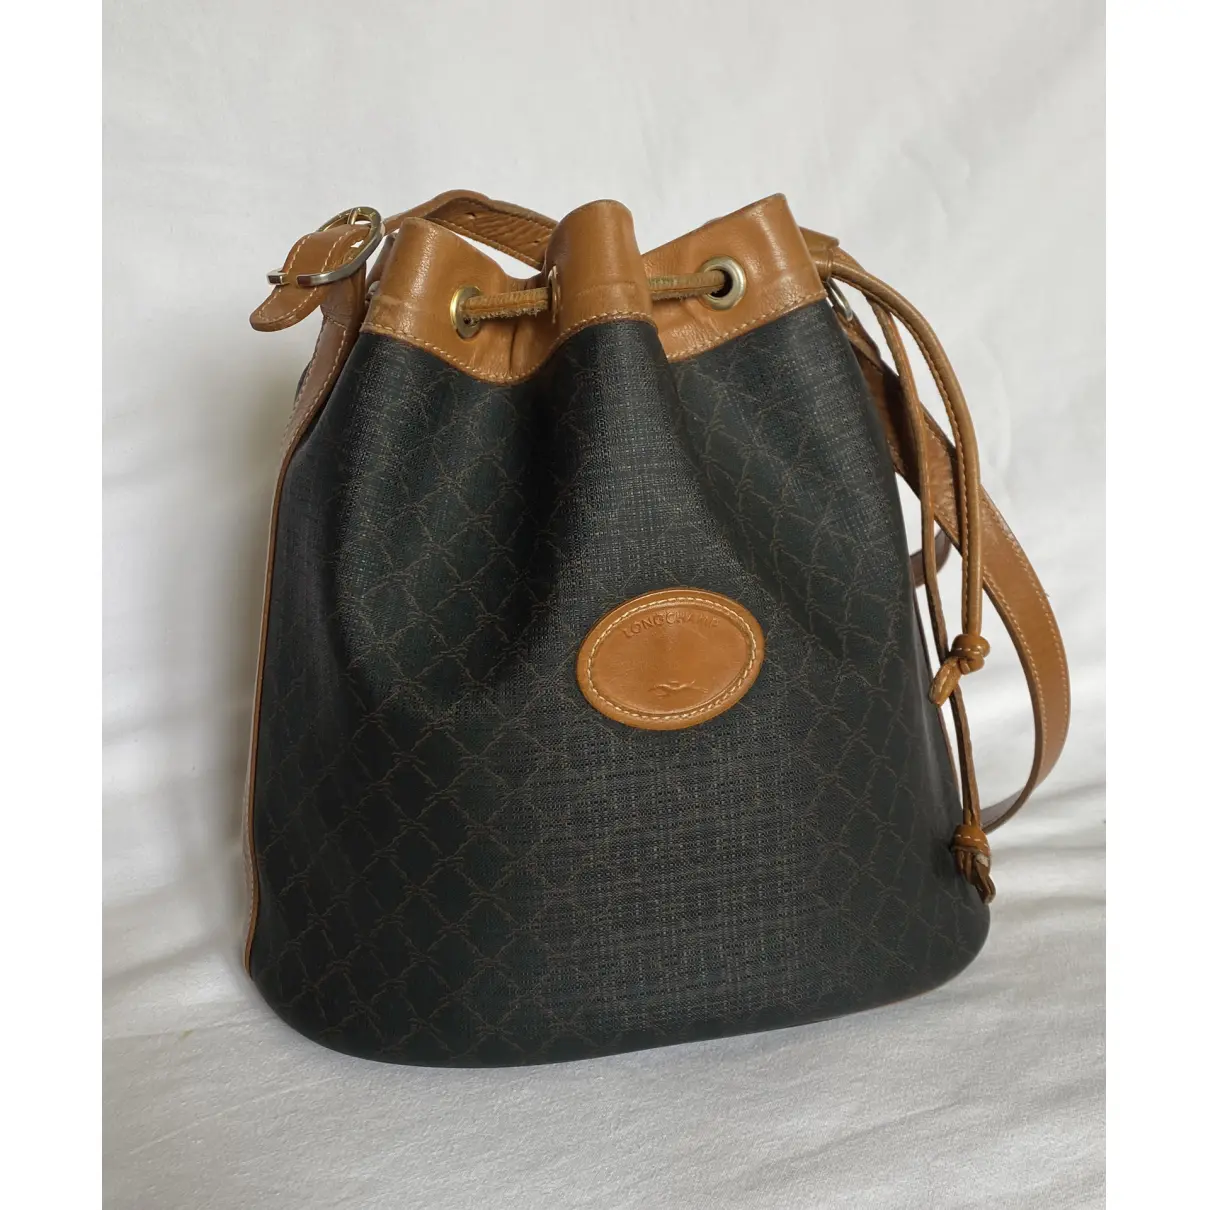 Buy Longchamp Leather crossbody bag online